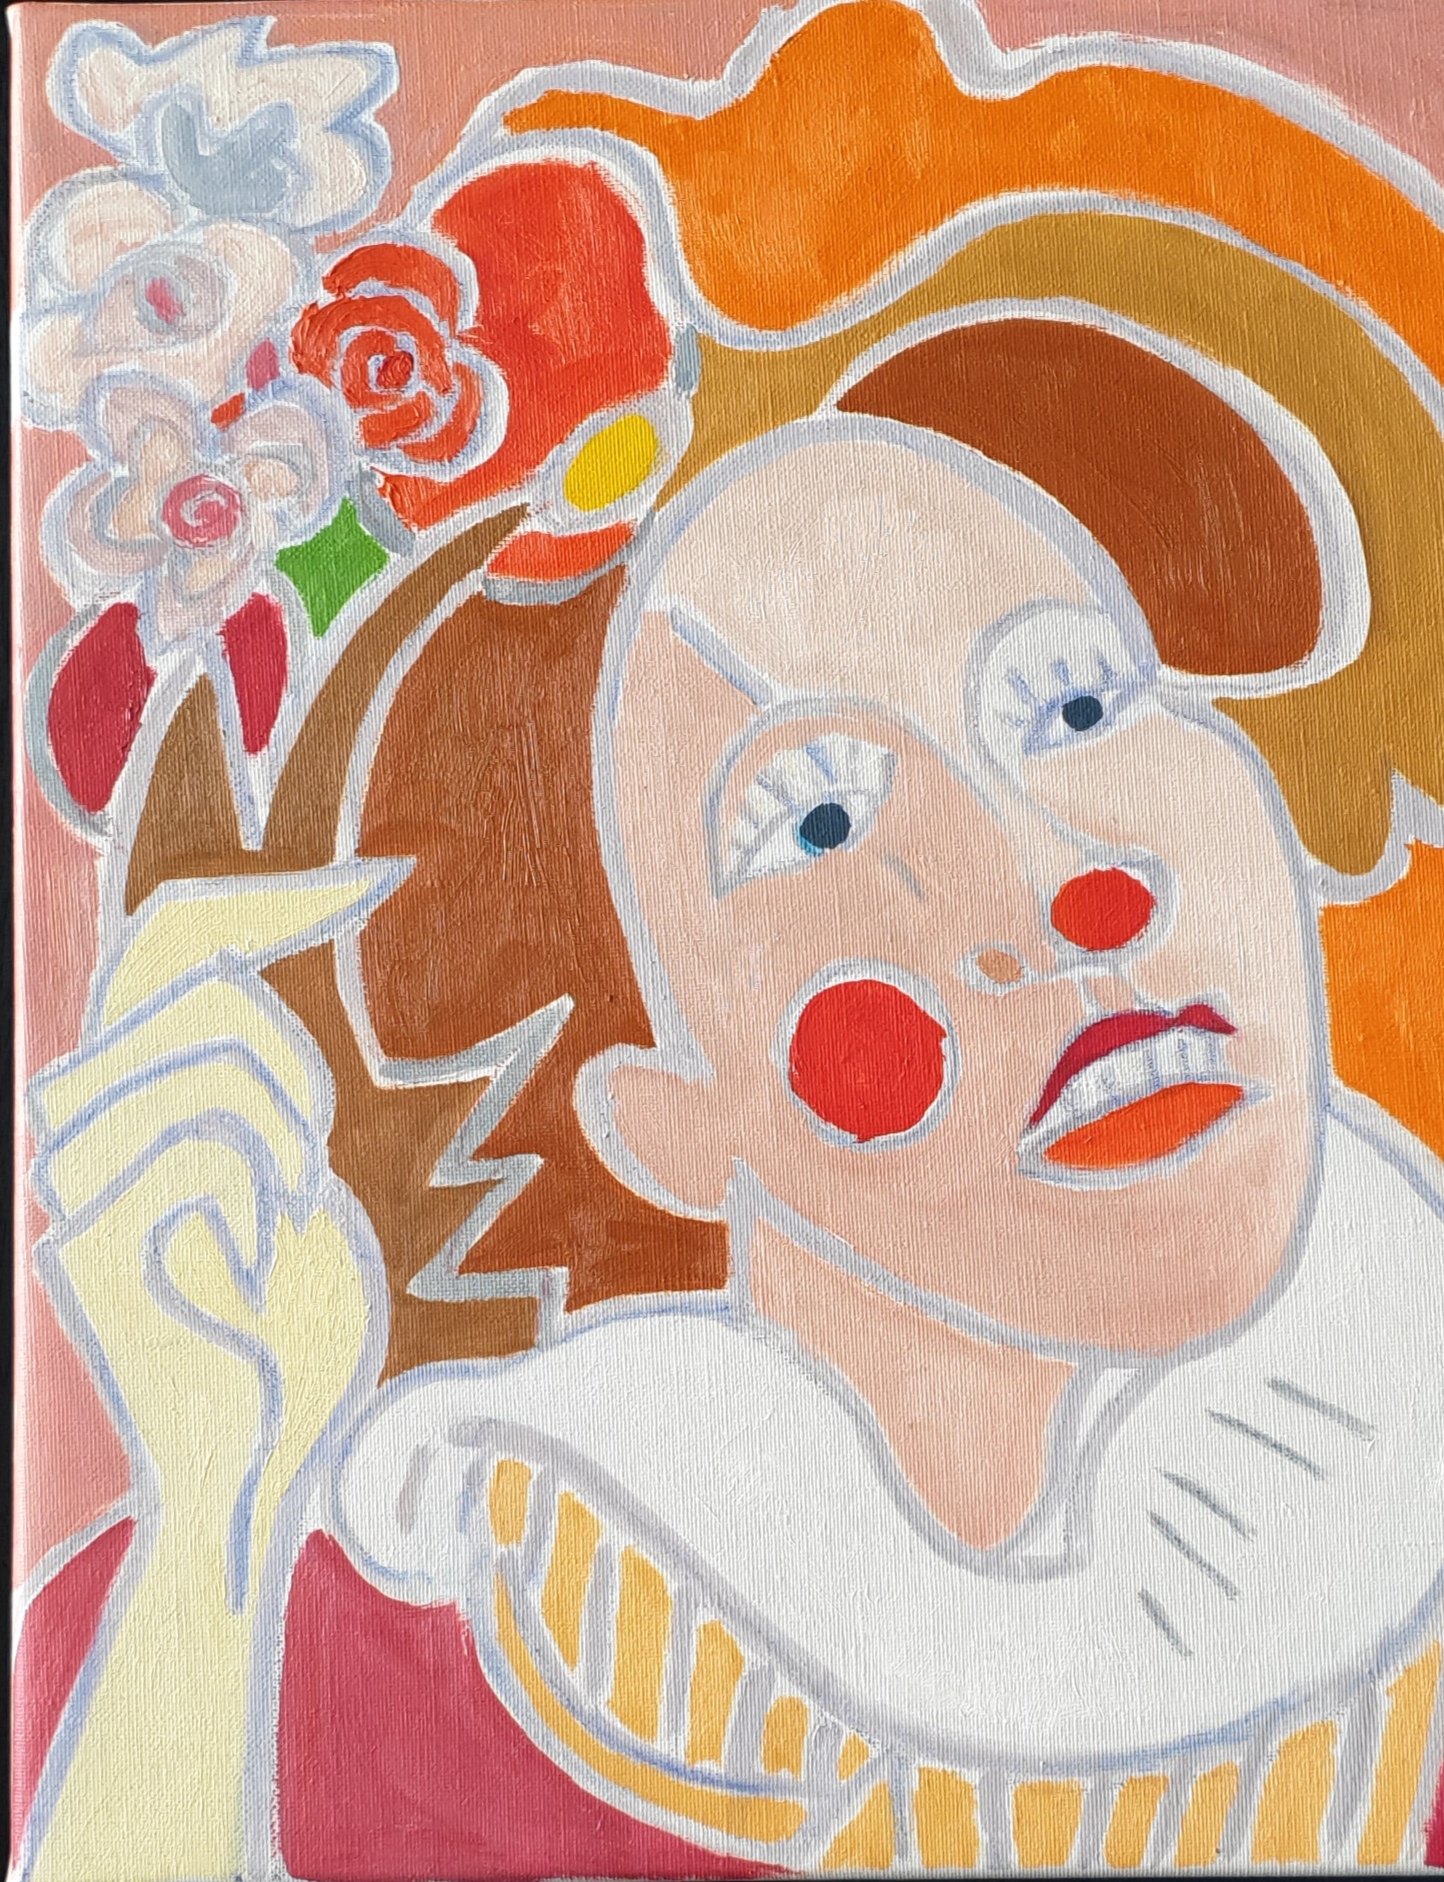 Emma la clown Peinture de Henri LANDIER 2020 41x33 cm Prix : 4 600 €